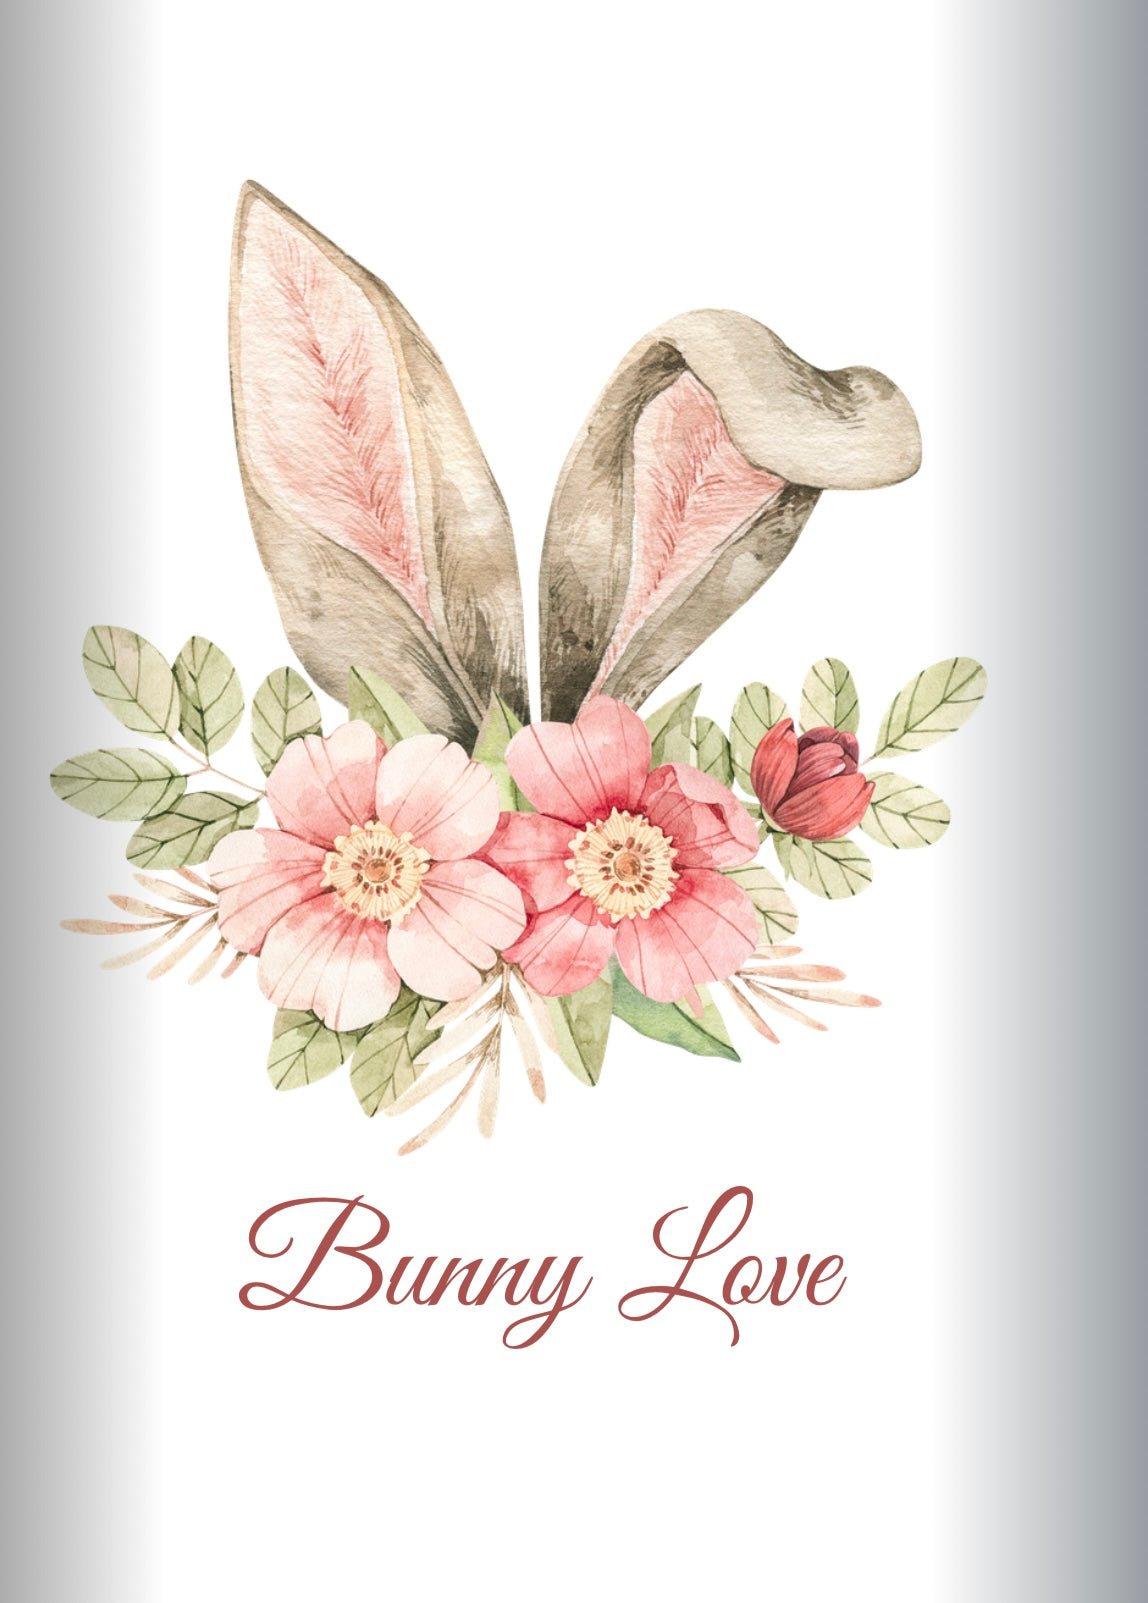 “Bunny Love”